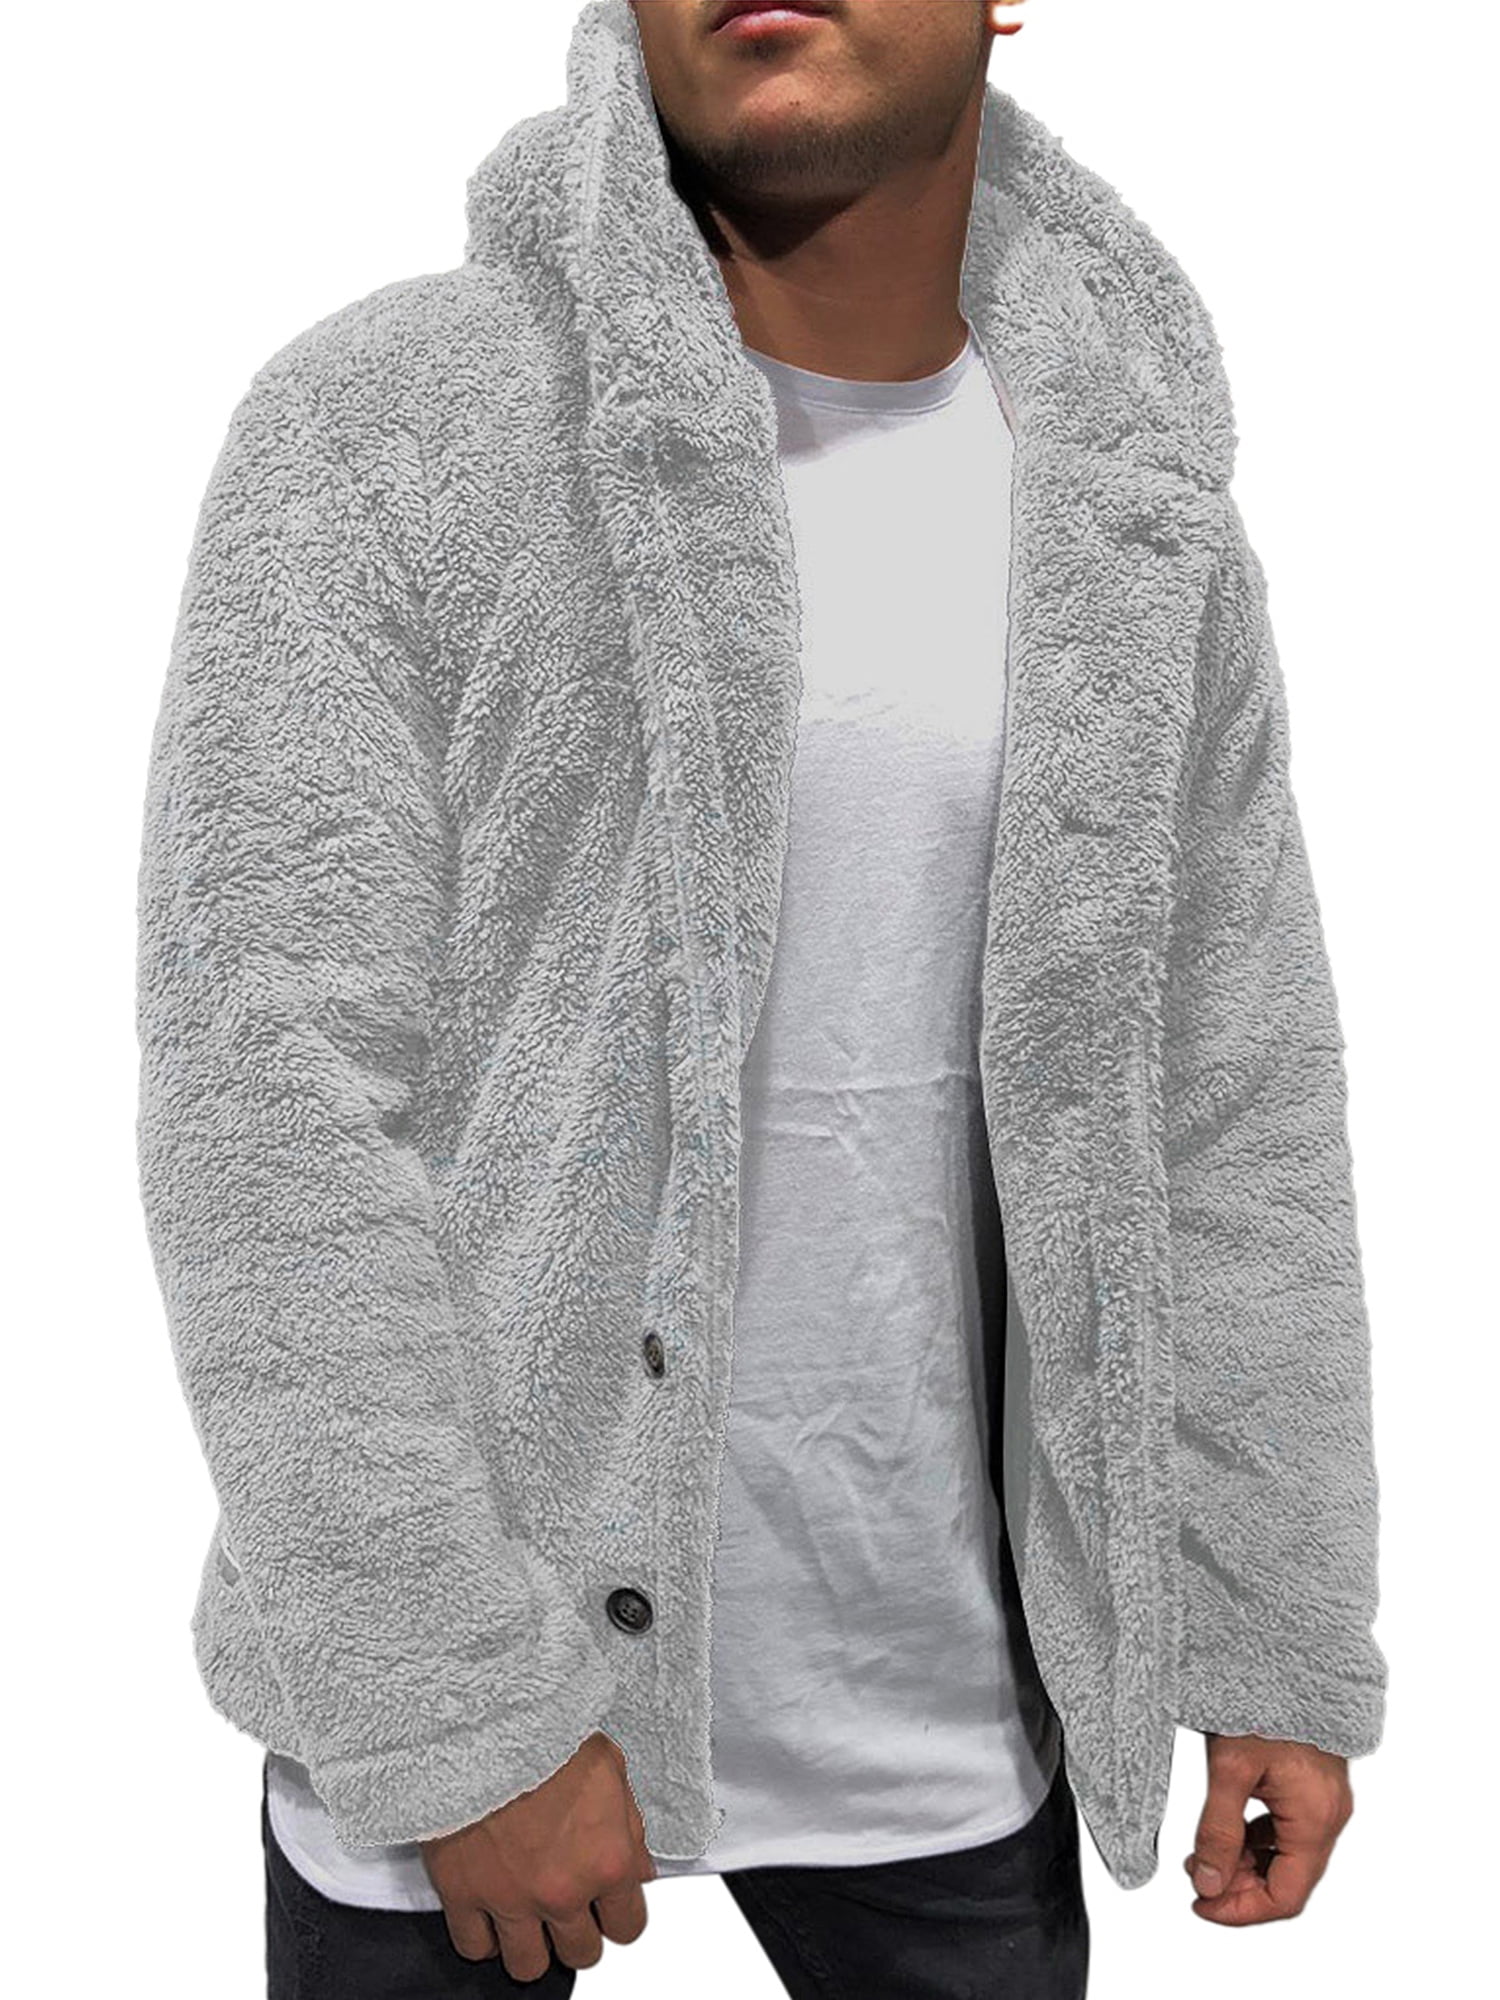 MAWCLOS - MAWCLOS Sherpa Fuzzy Fleece Hoodie for Men Oversized Hooded ...